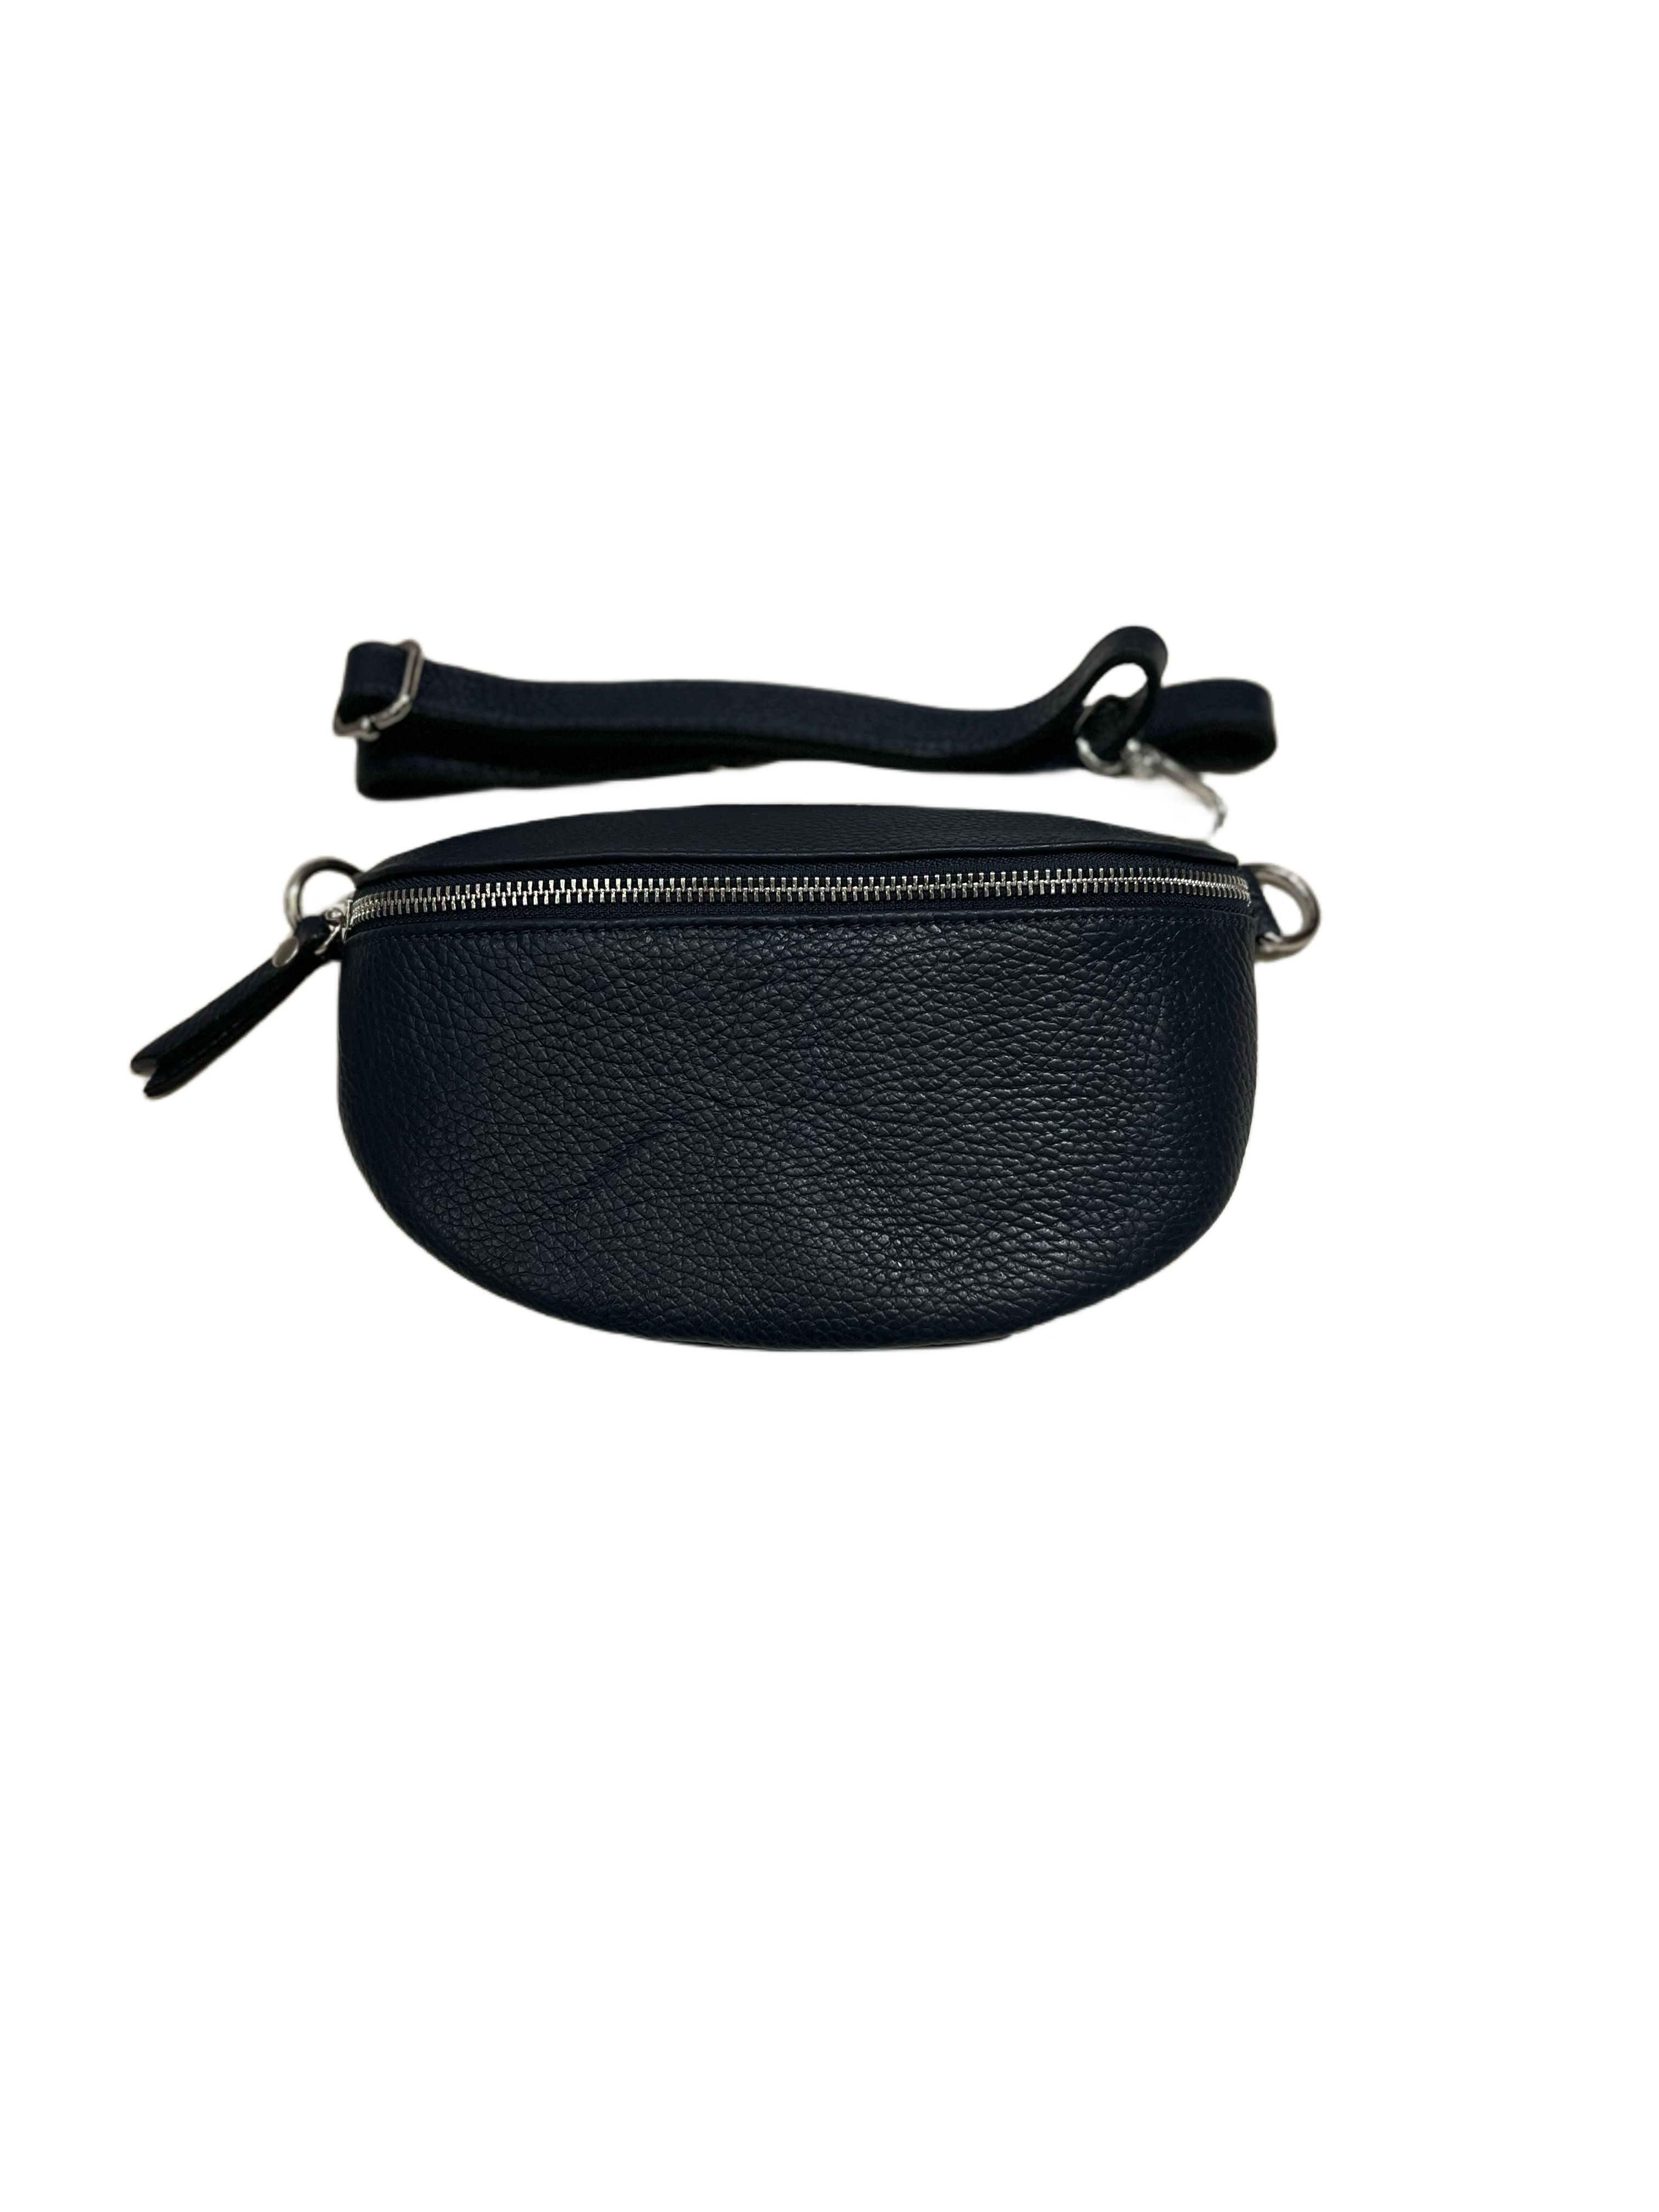 Bodella black genuine leather hip bag- made in Italy